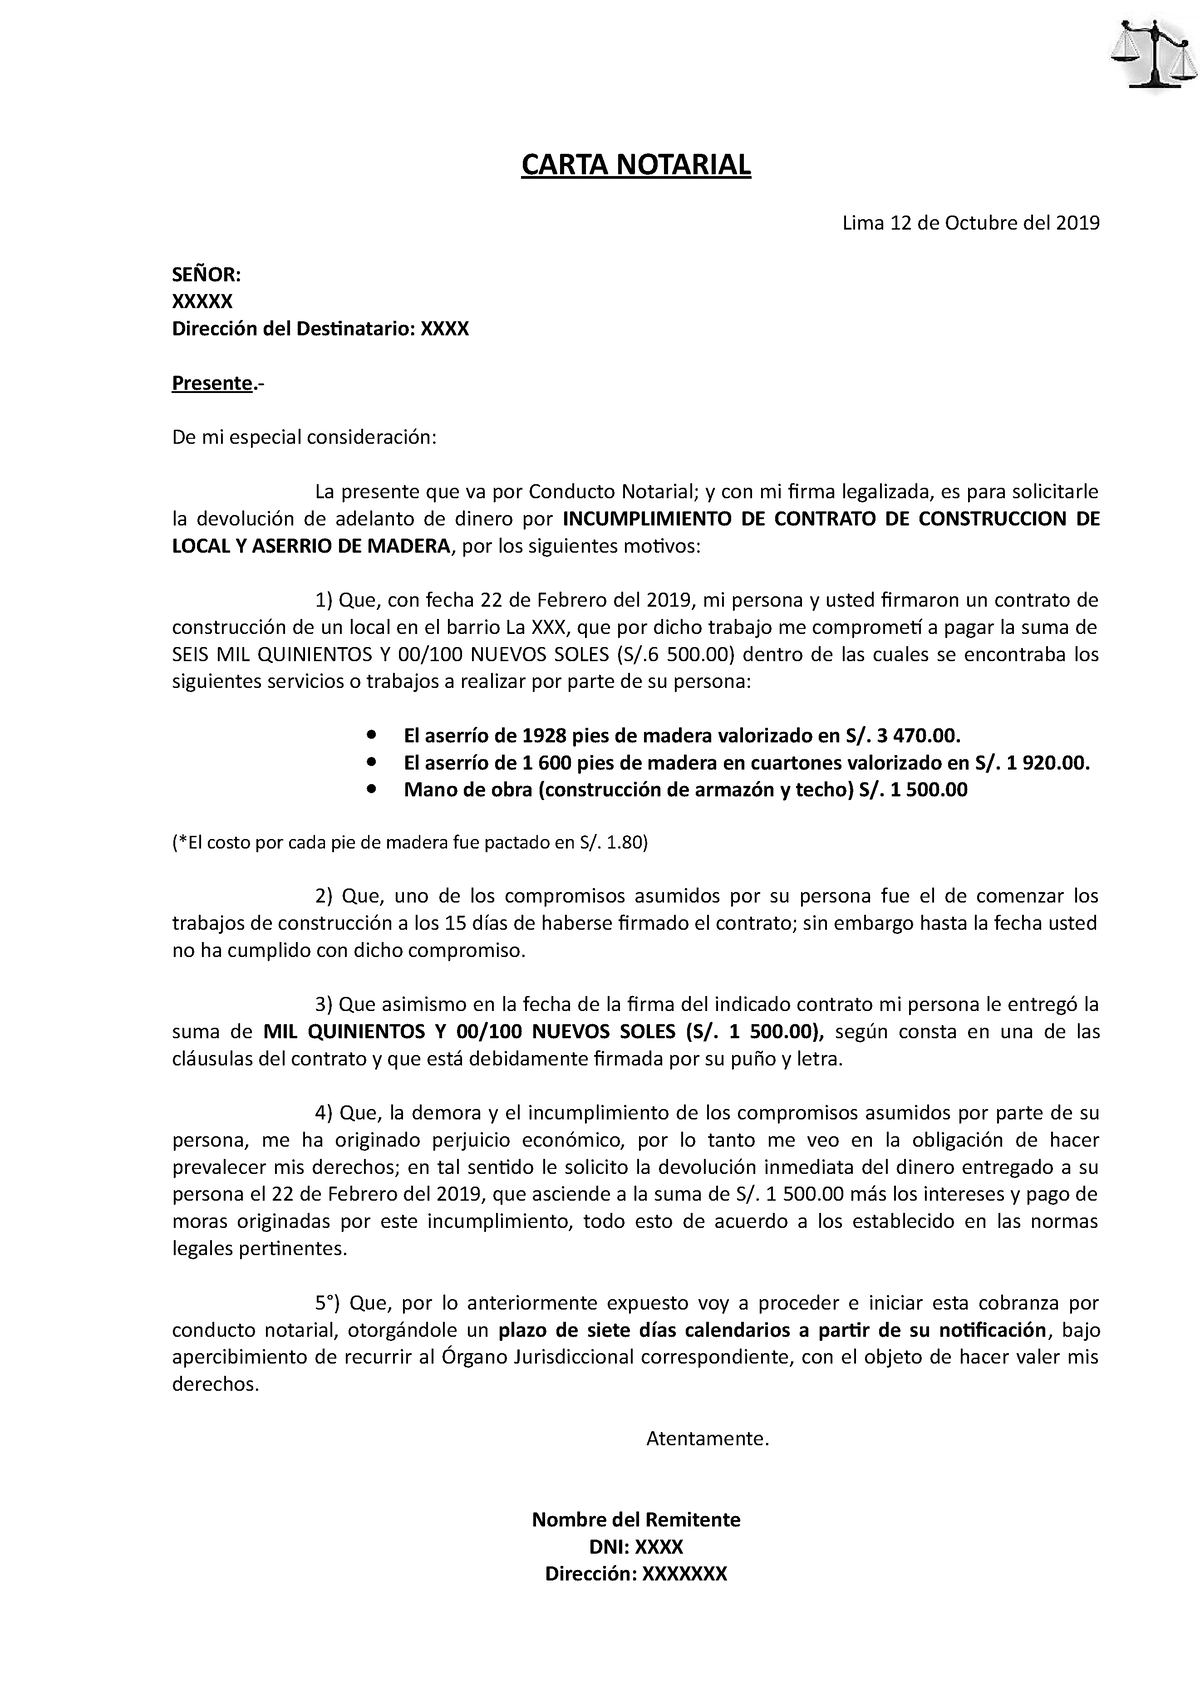 Carta Notarial Por Incumplimiento De Contrato Lima 12 De Octubre Del 2019 SeÑor Xxxxx 1418